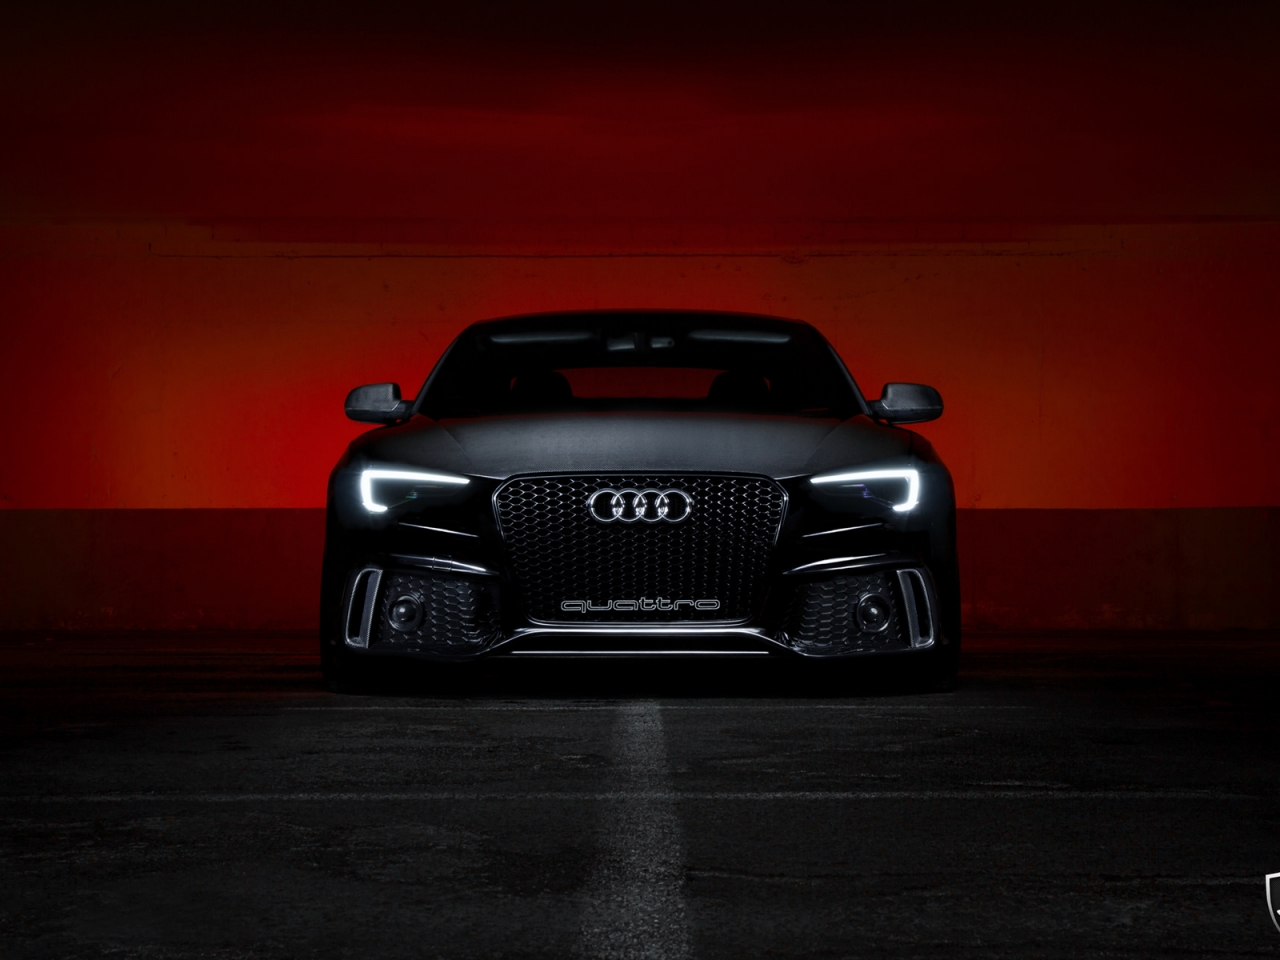 Audi S5 Black for 1280 x 960 resolution